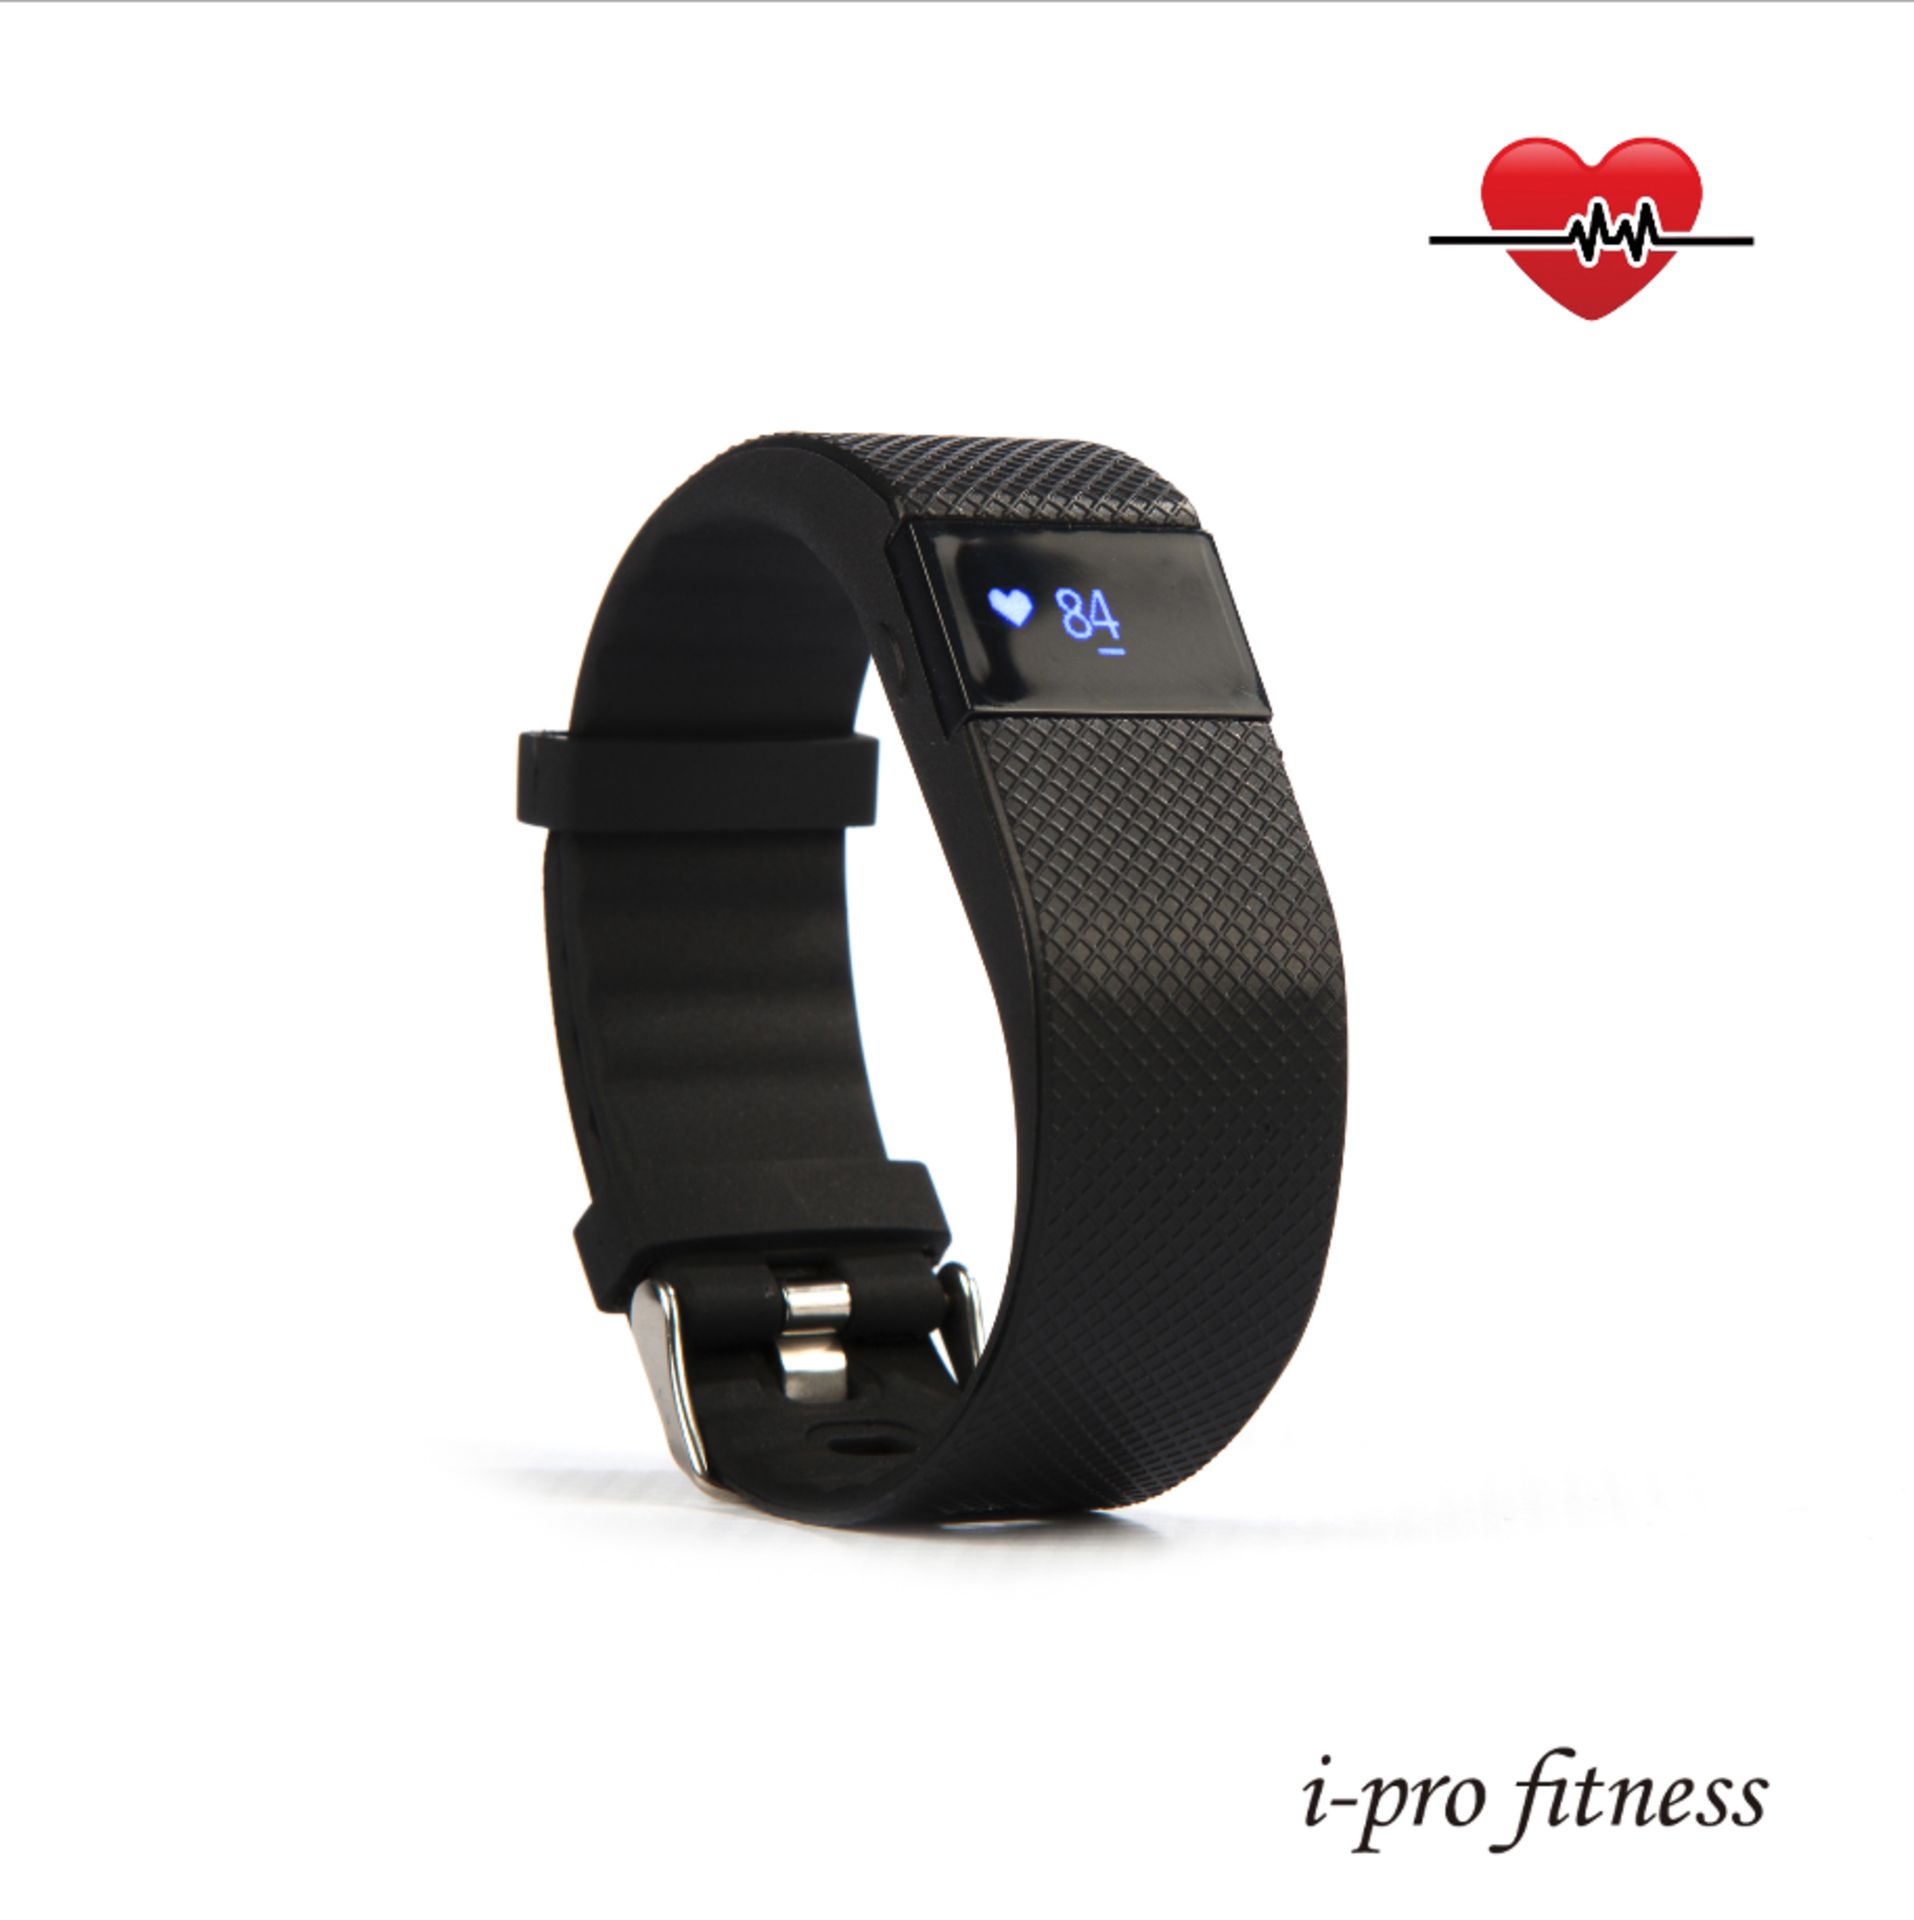 ***Trade lot 50 x Units Fitness Tracker i-pro fitness, Bluetooth 4.0 Sports Smart Bracelet*** - Image 2 of 8